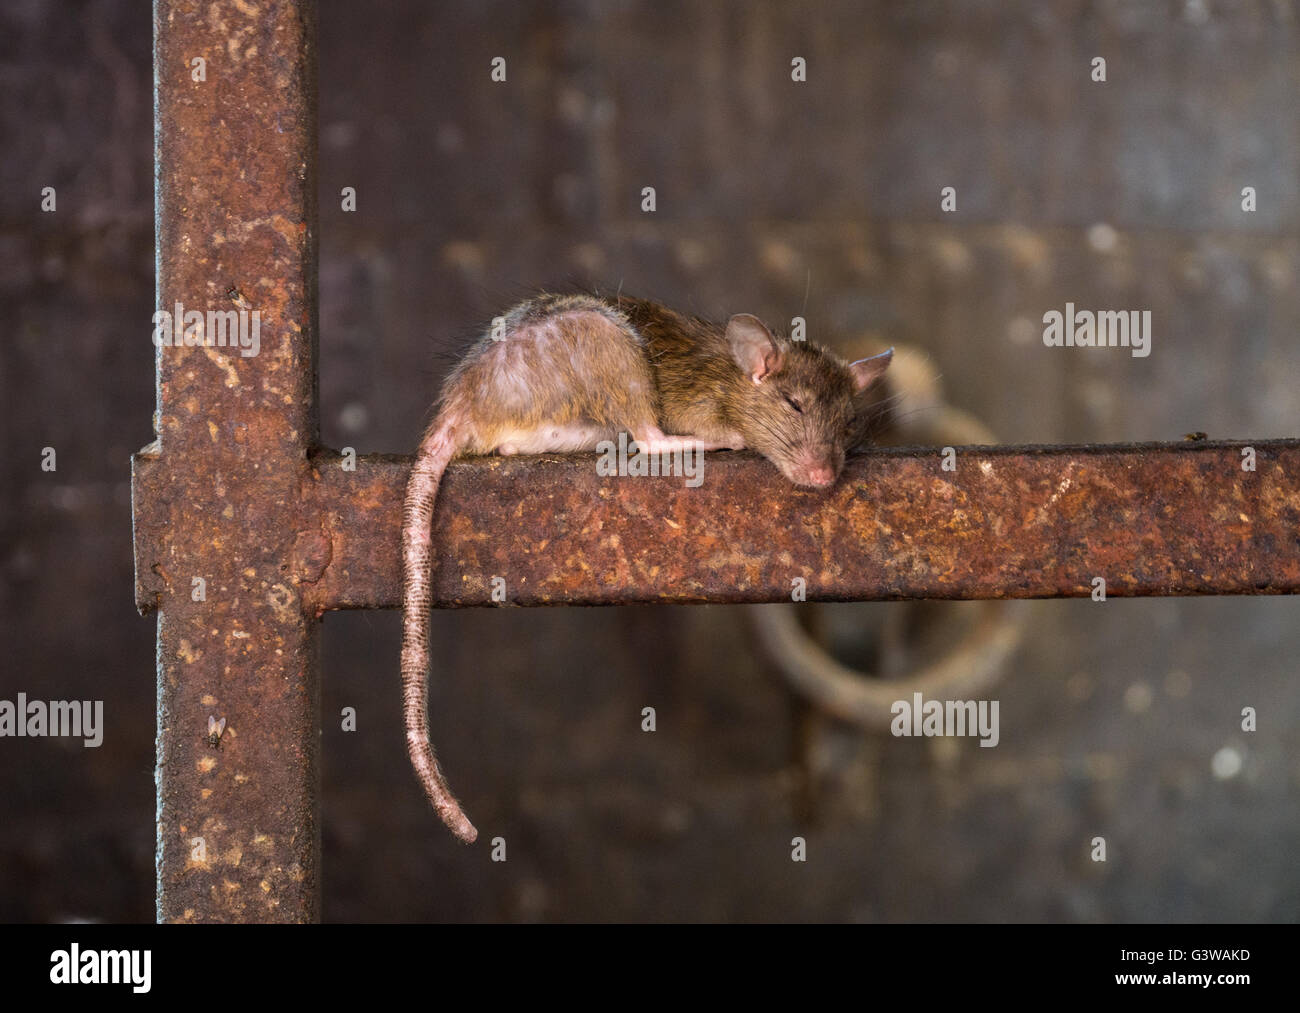 Sleeping rat on a rusty bar. Bikaner Rat Temple, India. Stock Photo